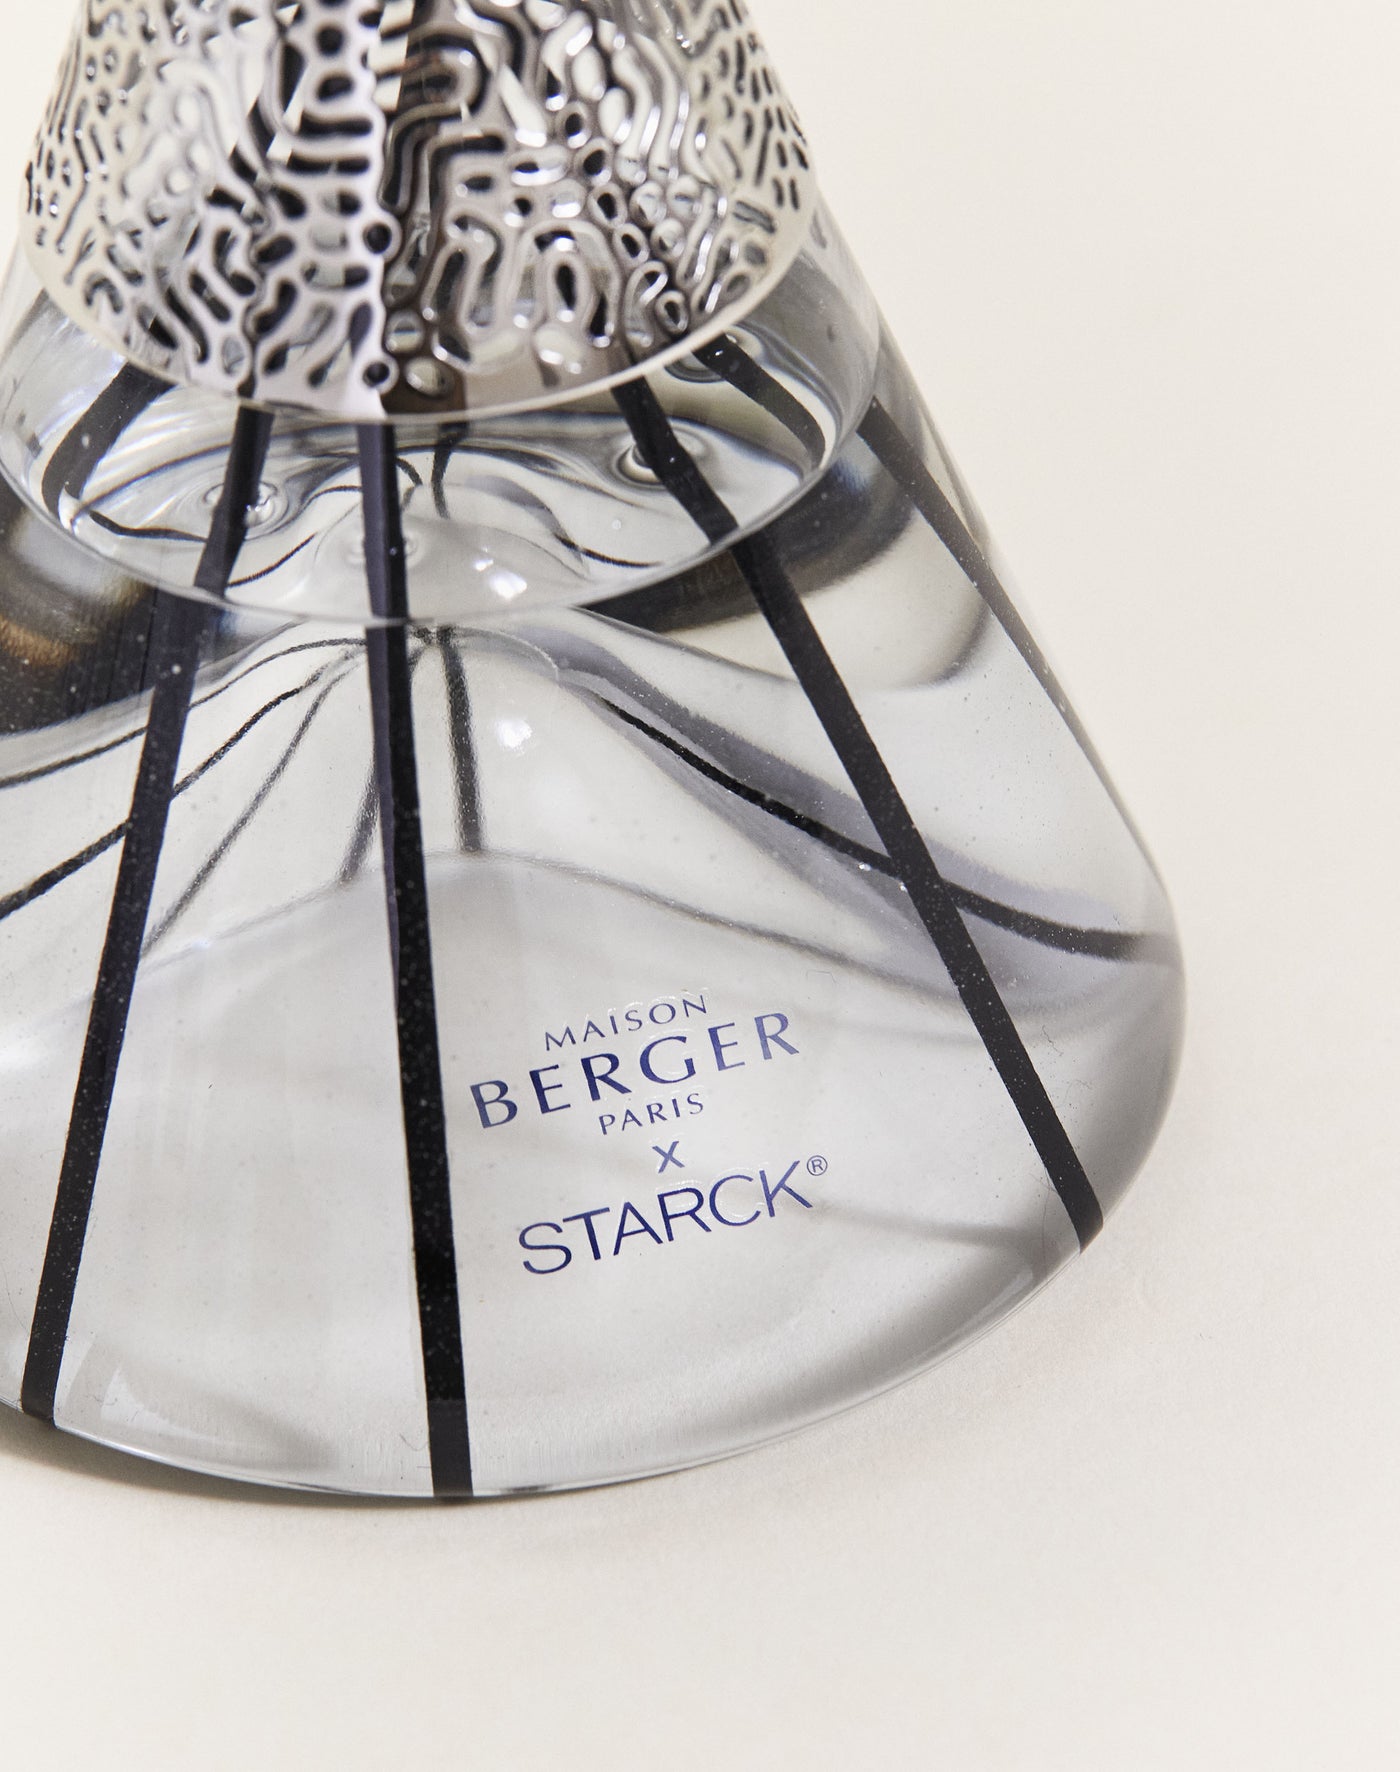 Parfumverspreider by Starck Peau de Pierre